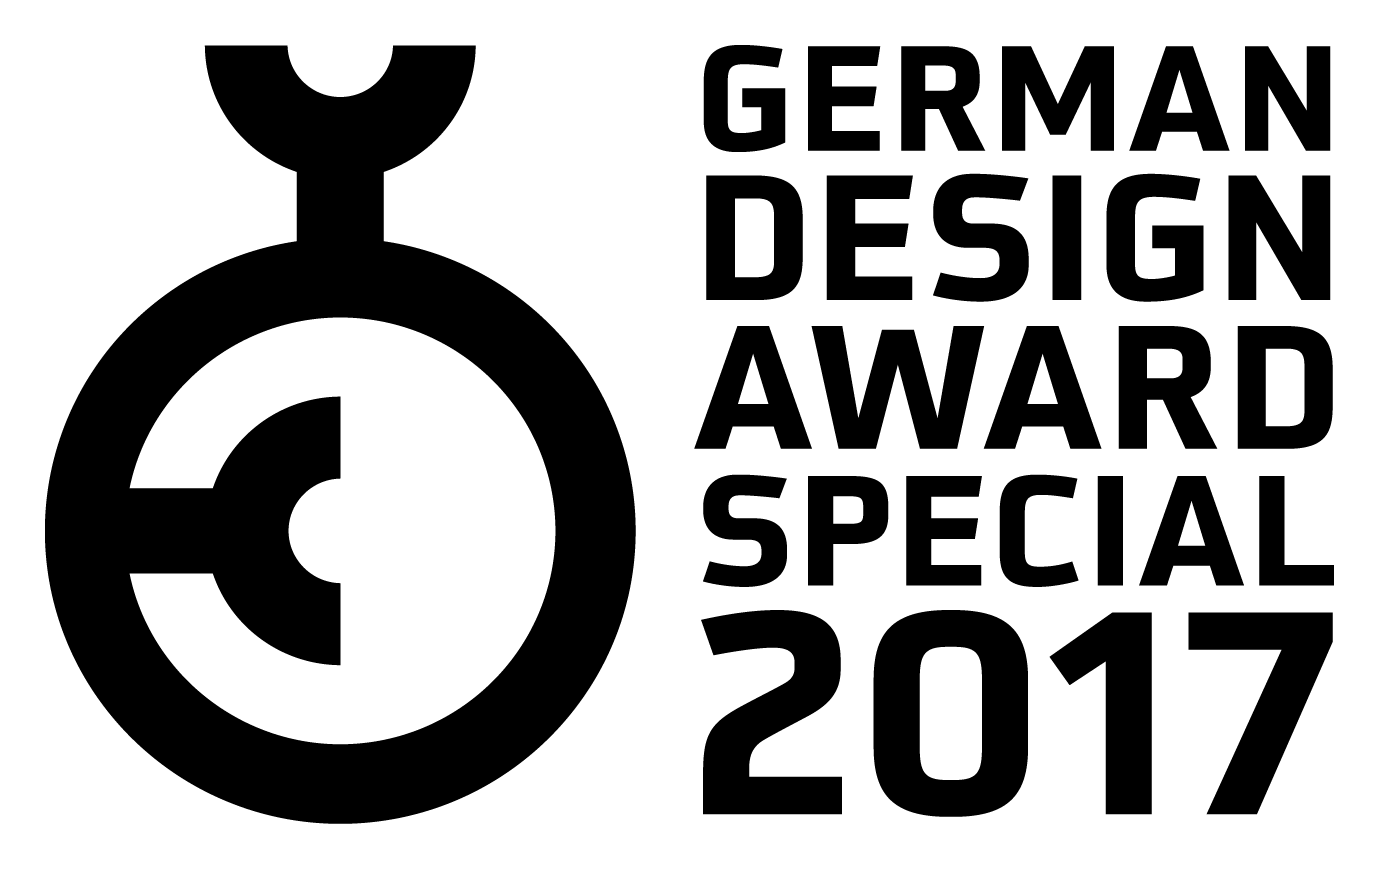 KUBIK ONE receives a German Design Award 2017